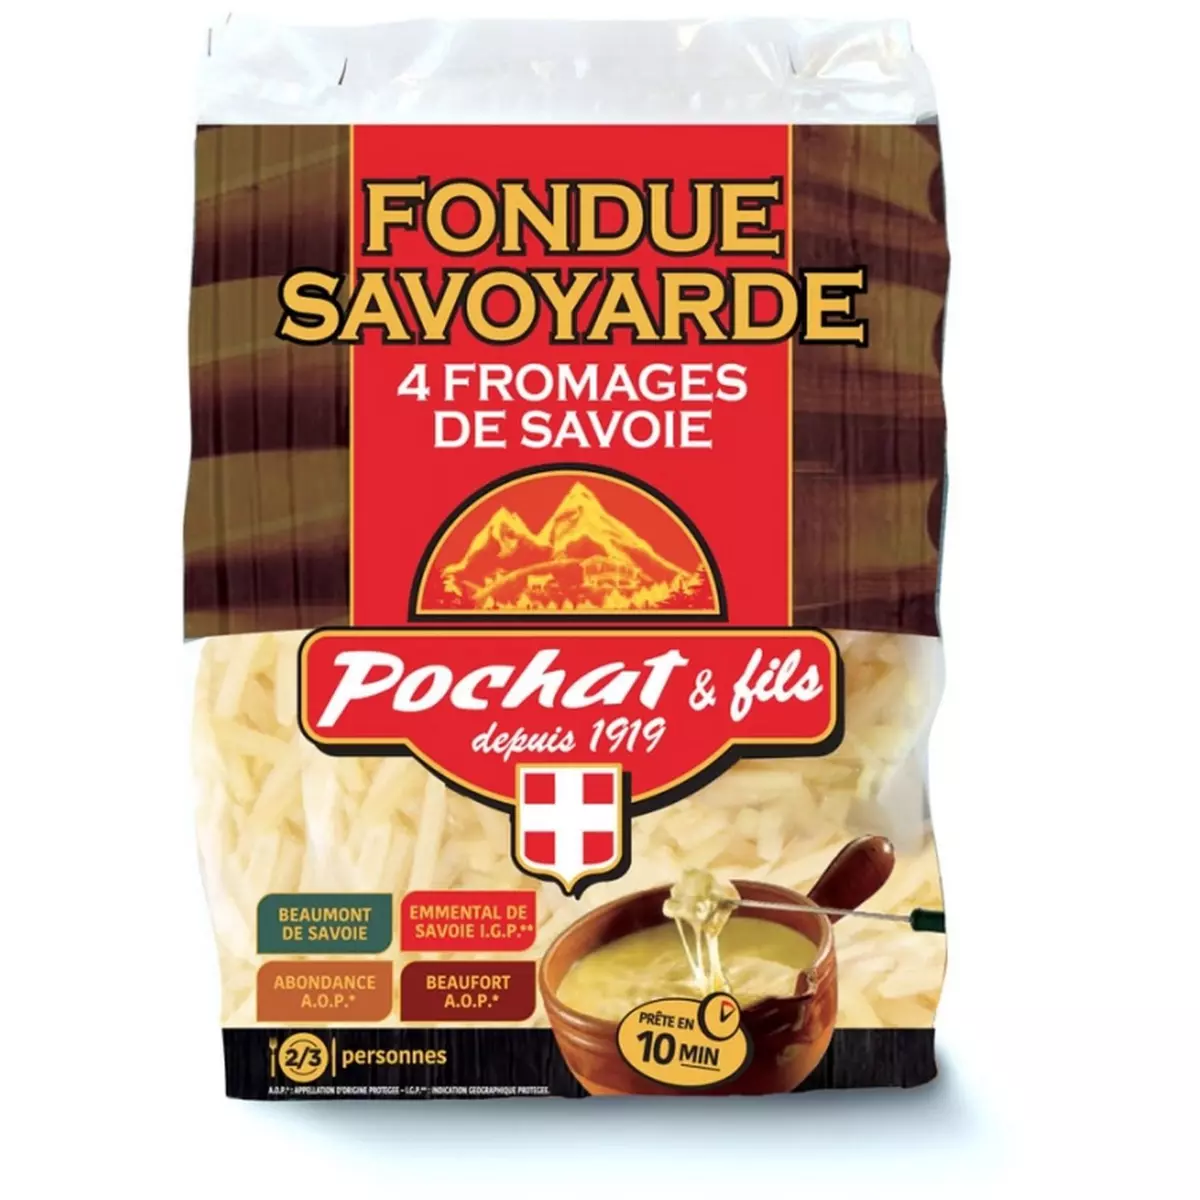 POCHAT & FILS Fondue savoyarde 4 fromages 2-3 portions 400g